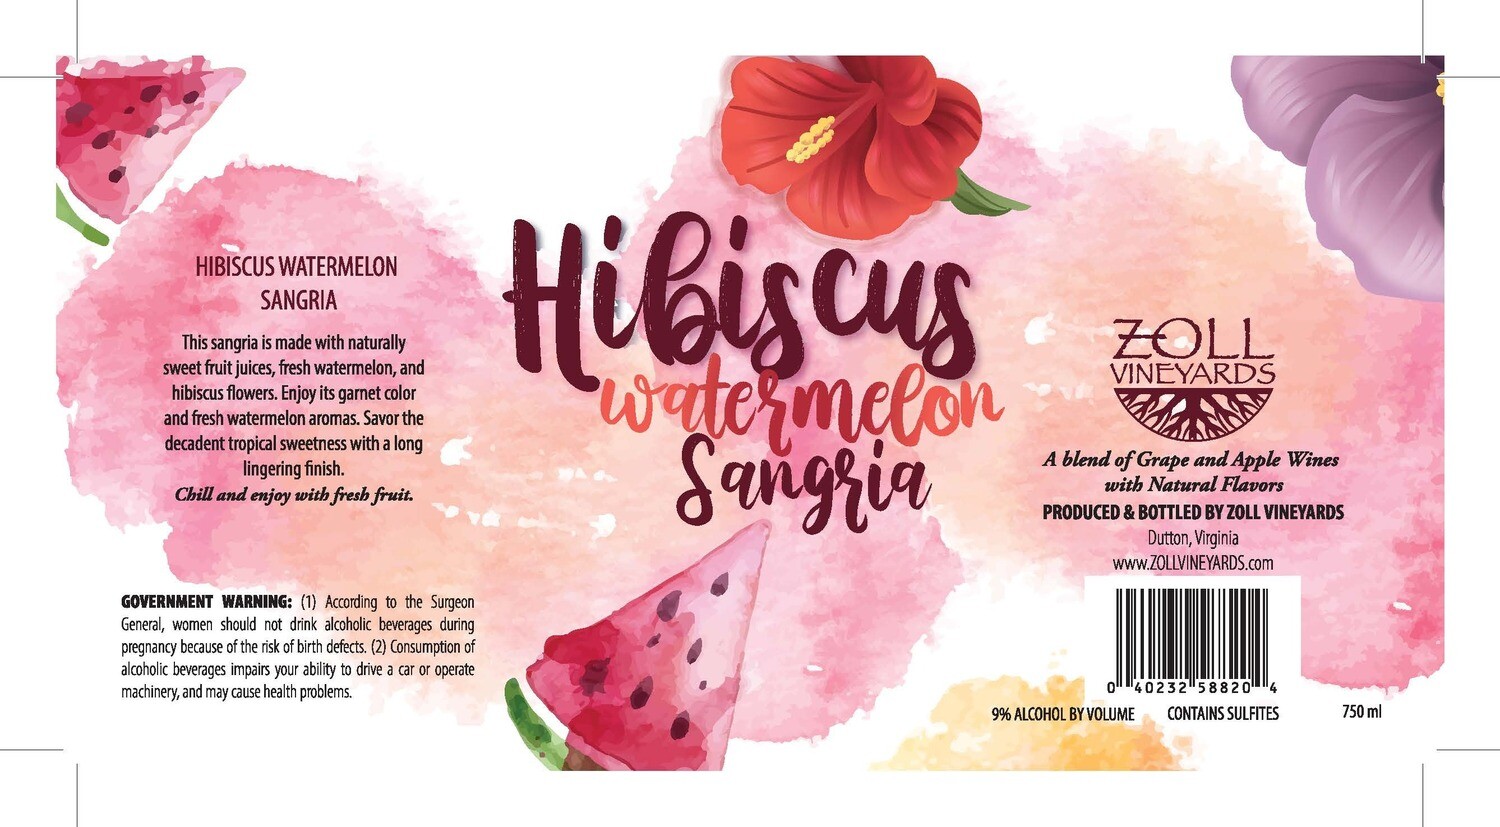 750 ml Hibiscus Watermelon Sangria Bottle 